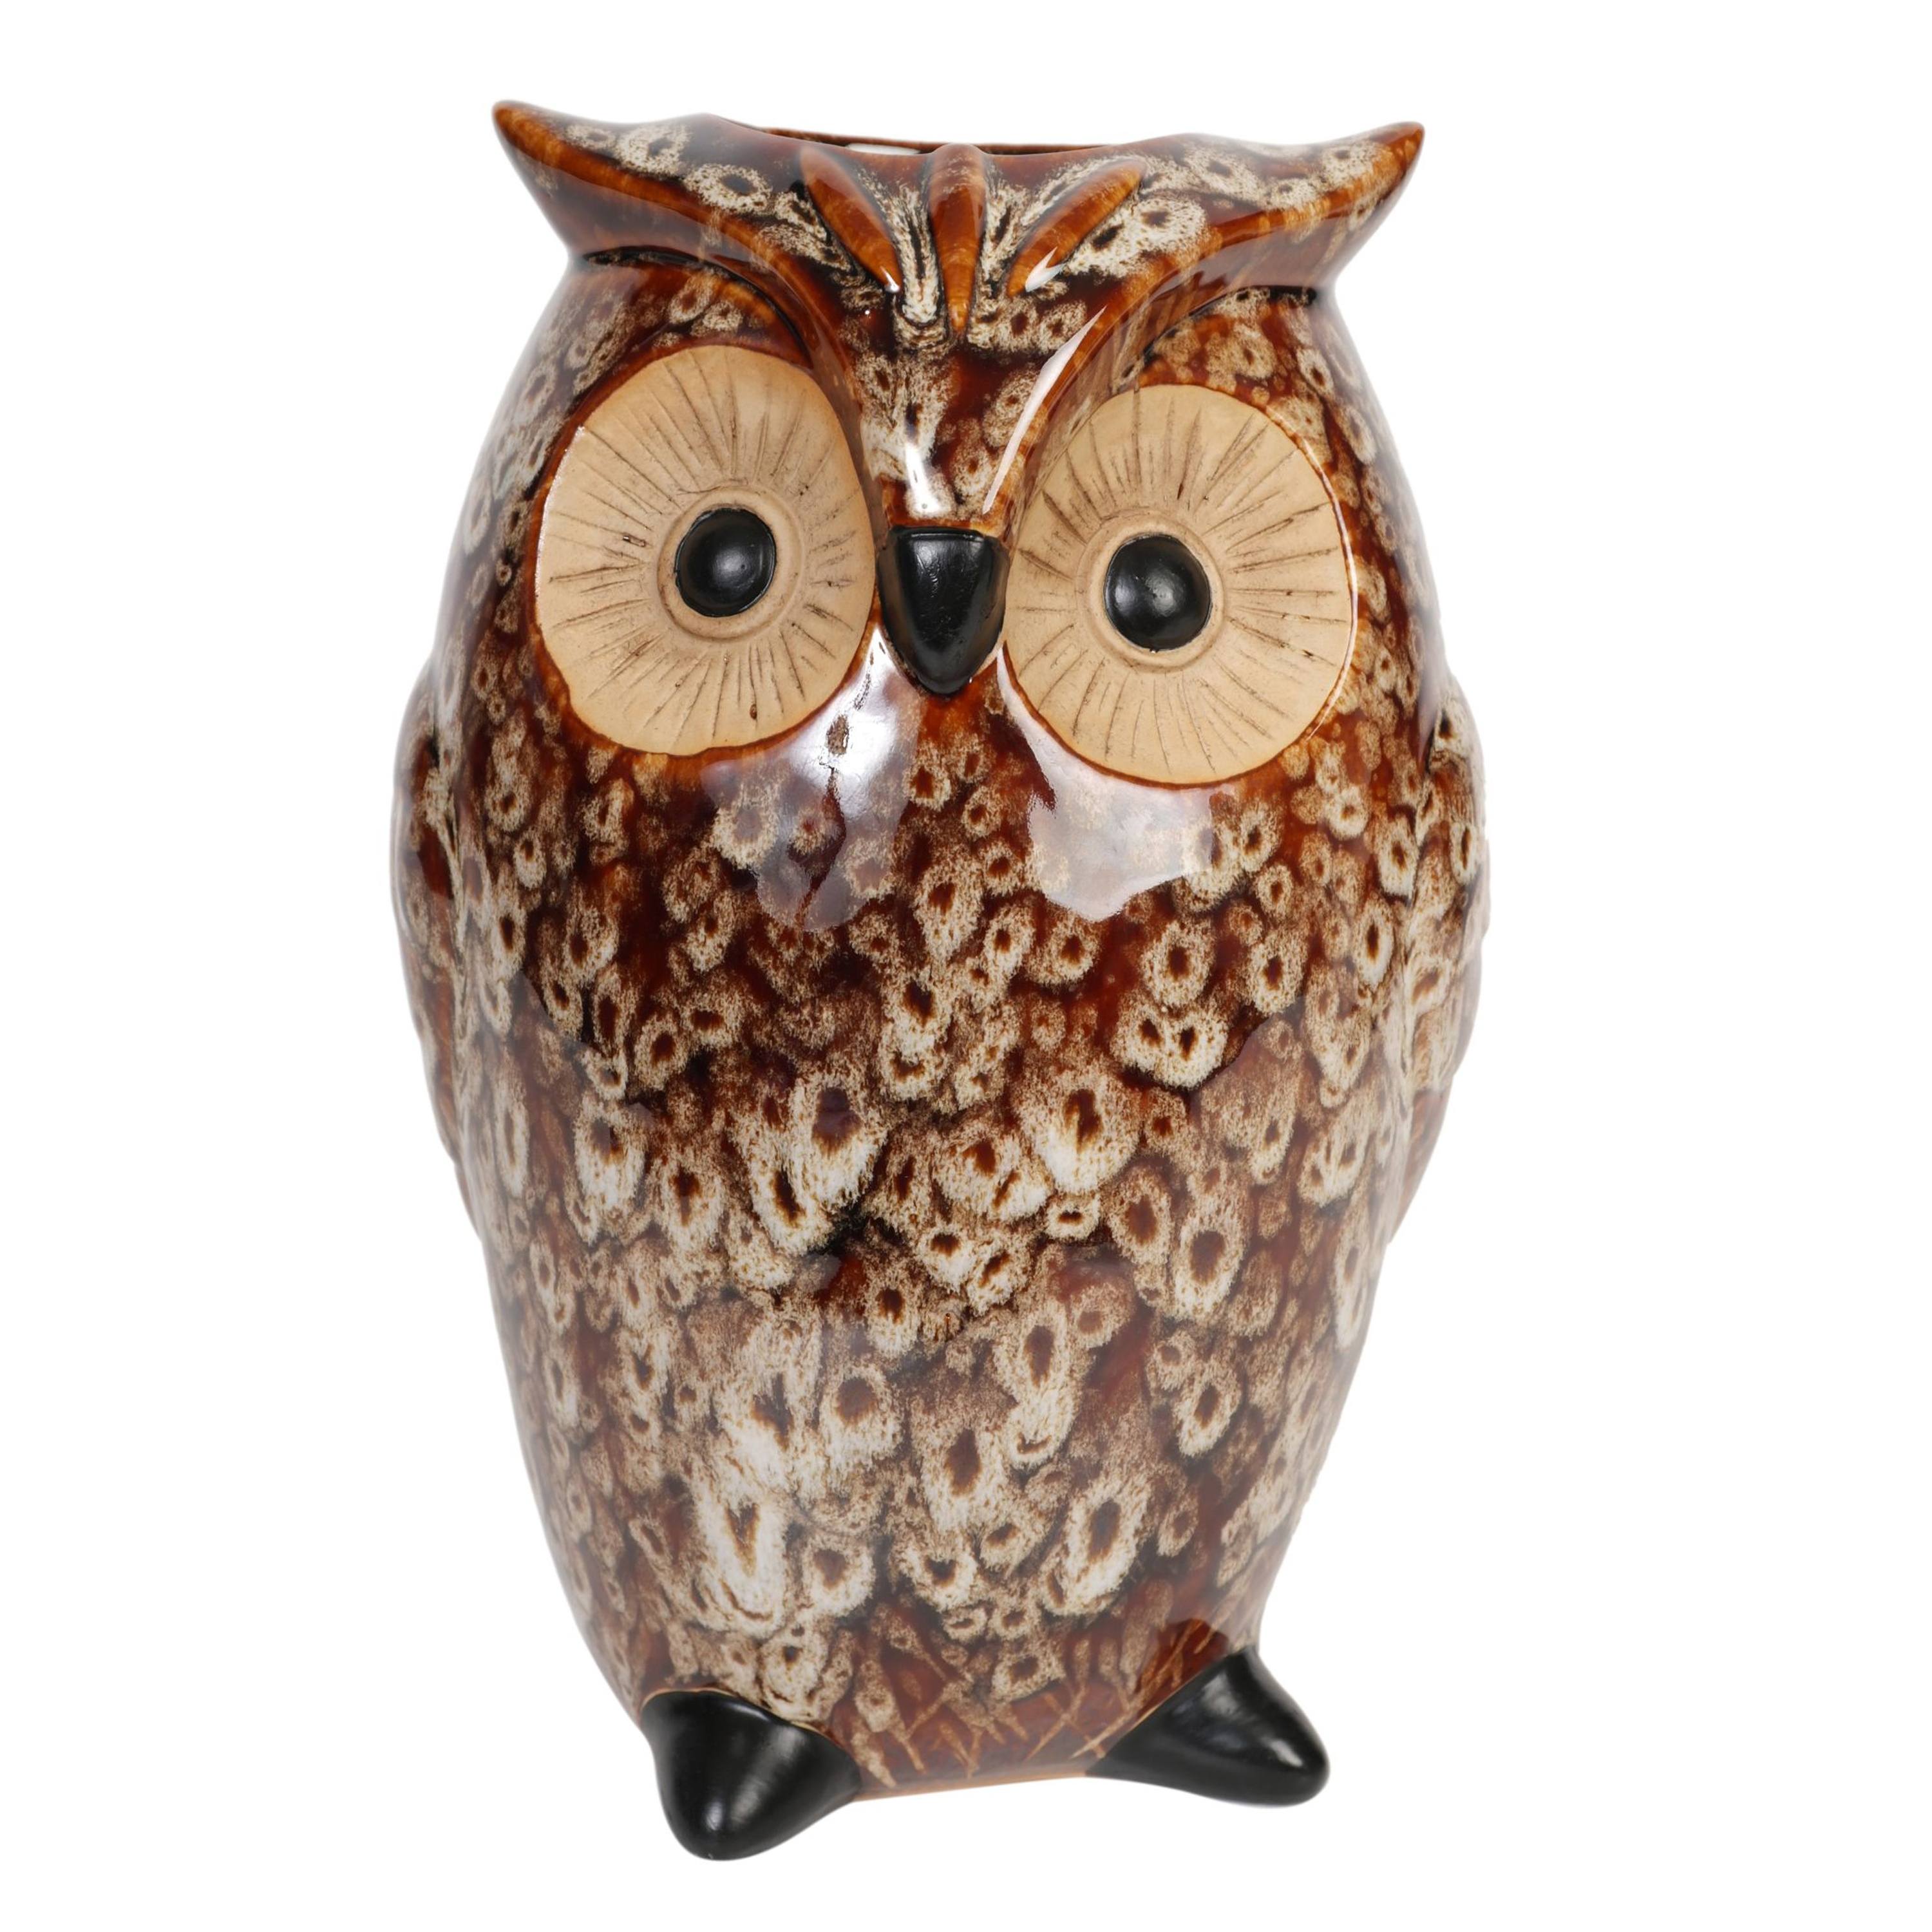 Hosley Ceramic Owl Vase, Brown - image 1 of 2